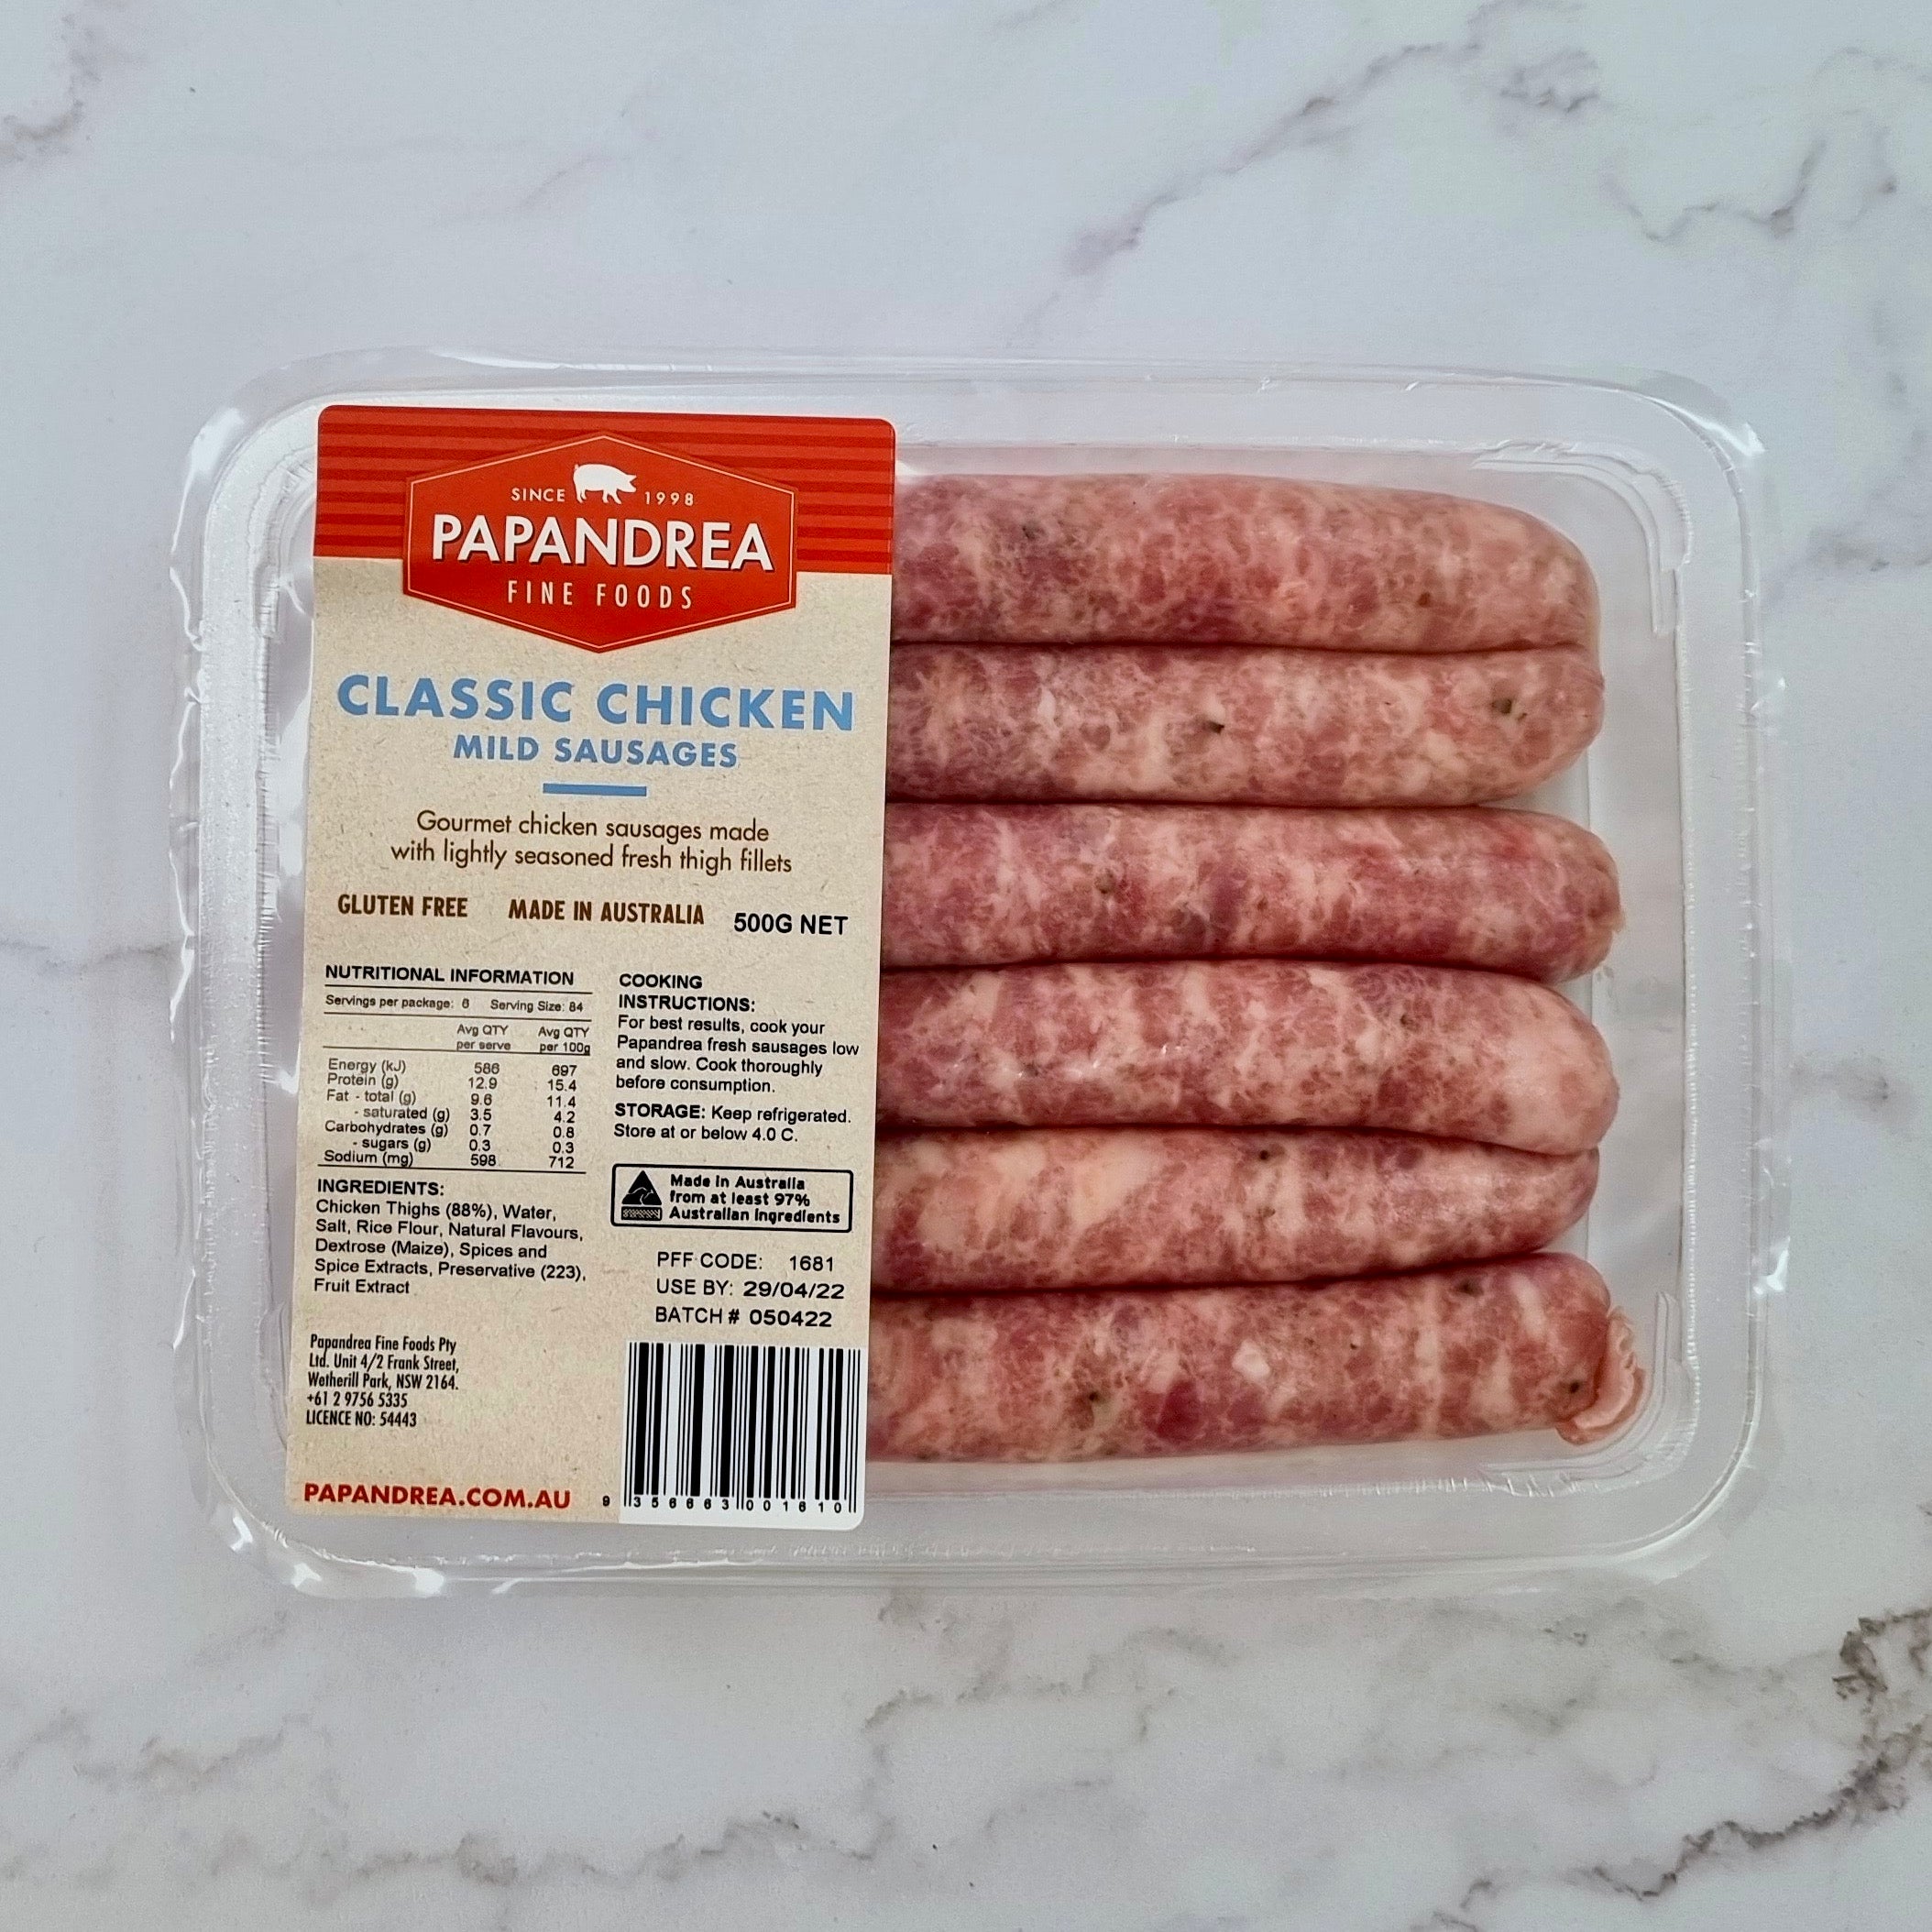 Classic Chicken - Mild Sausages